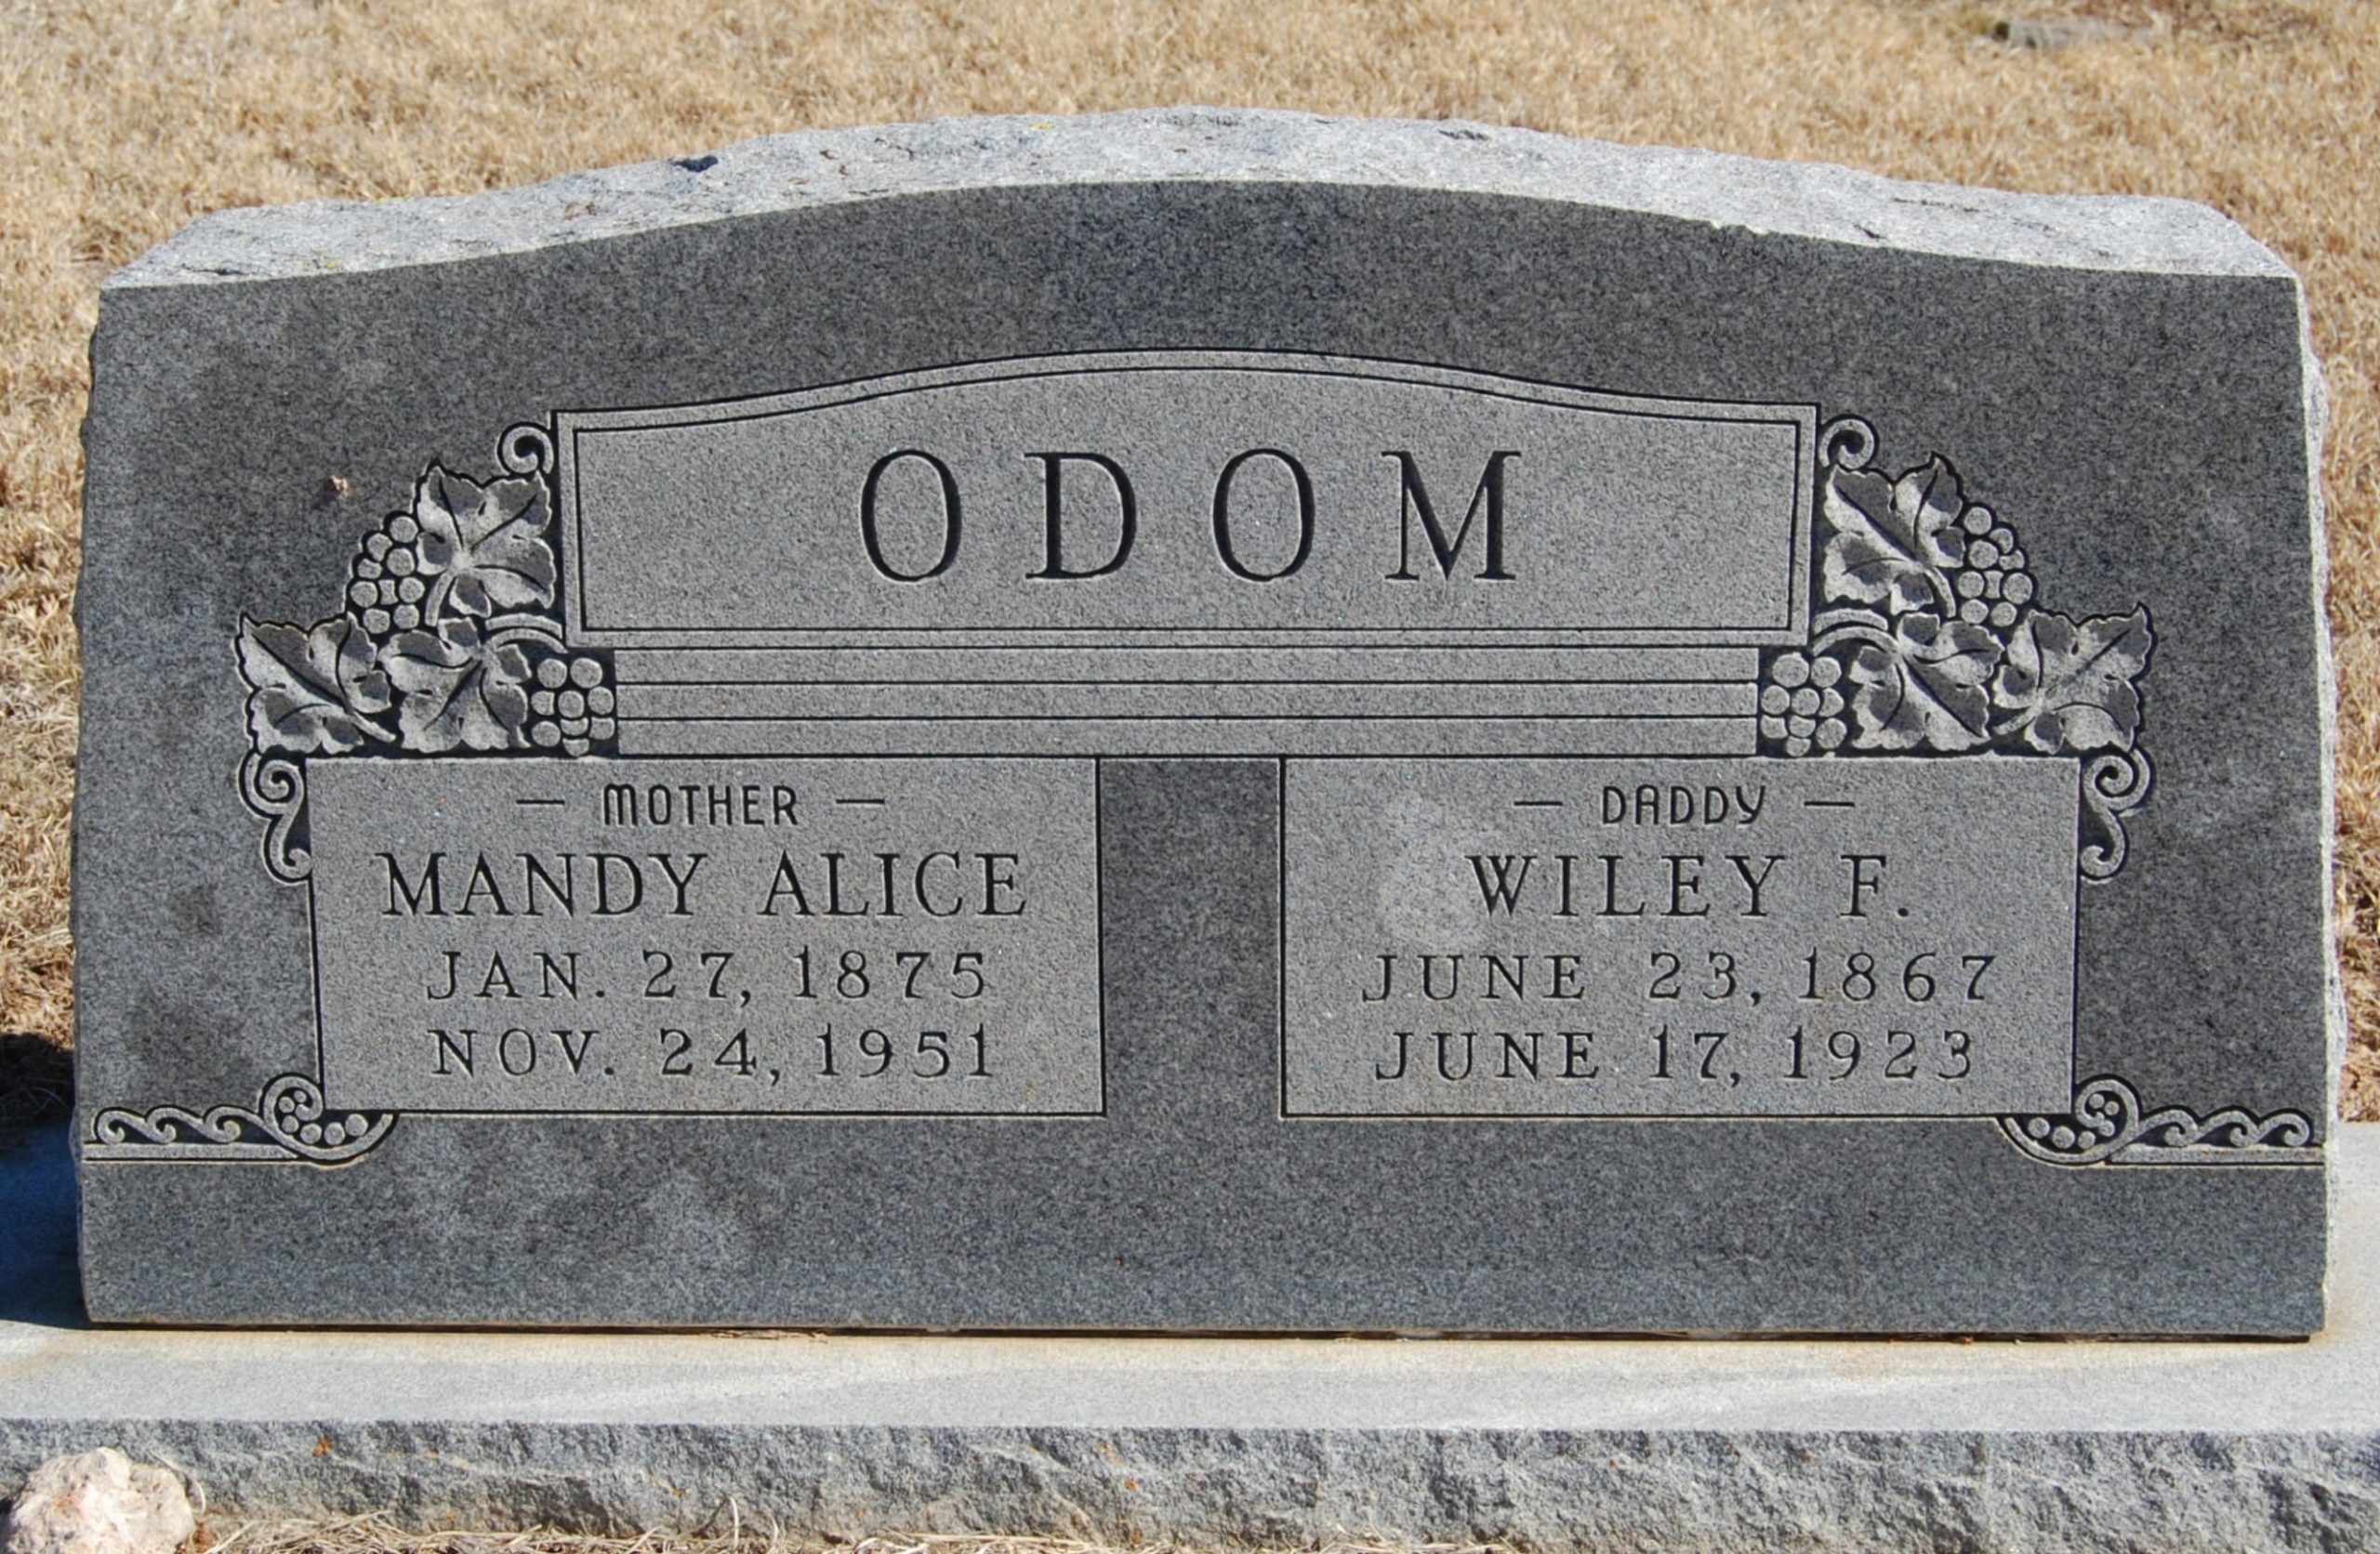 Odom headstone courtesy of Ken Jones and Findagrave